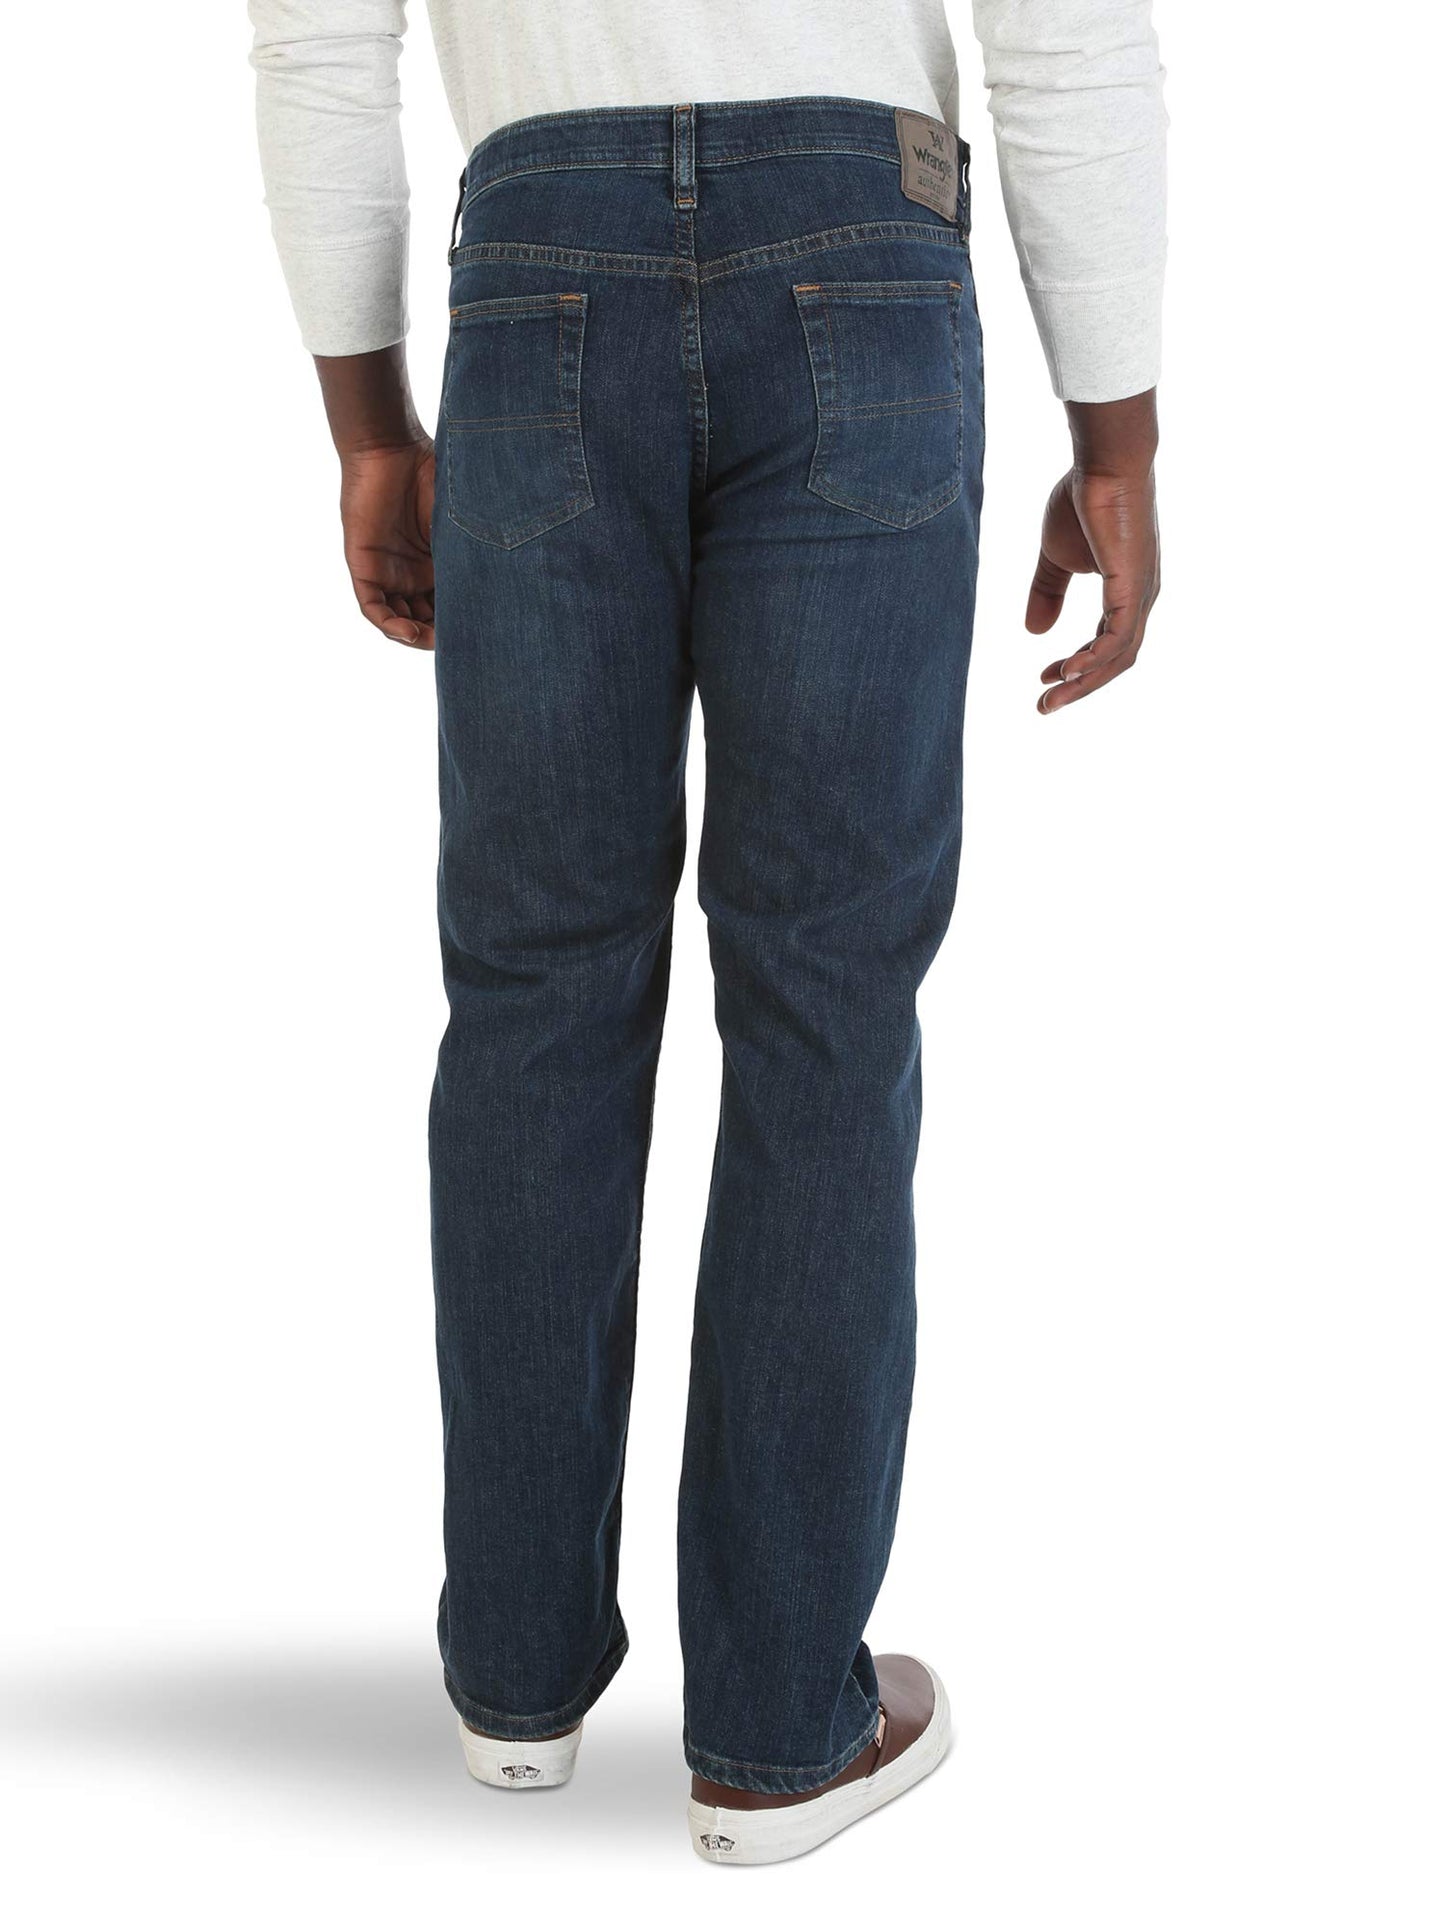 Wrangler Authentics Men's Big & Tall Comfort Flex Waist Relaxed Fit Jean, Carbon, 52W X 32L